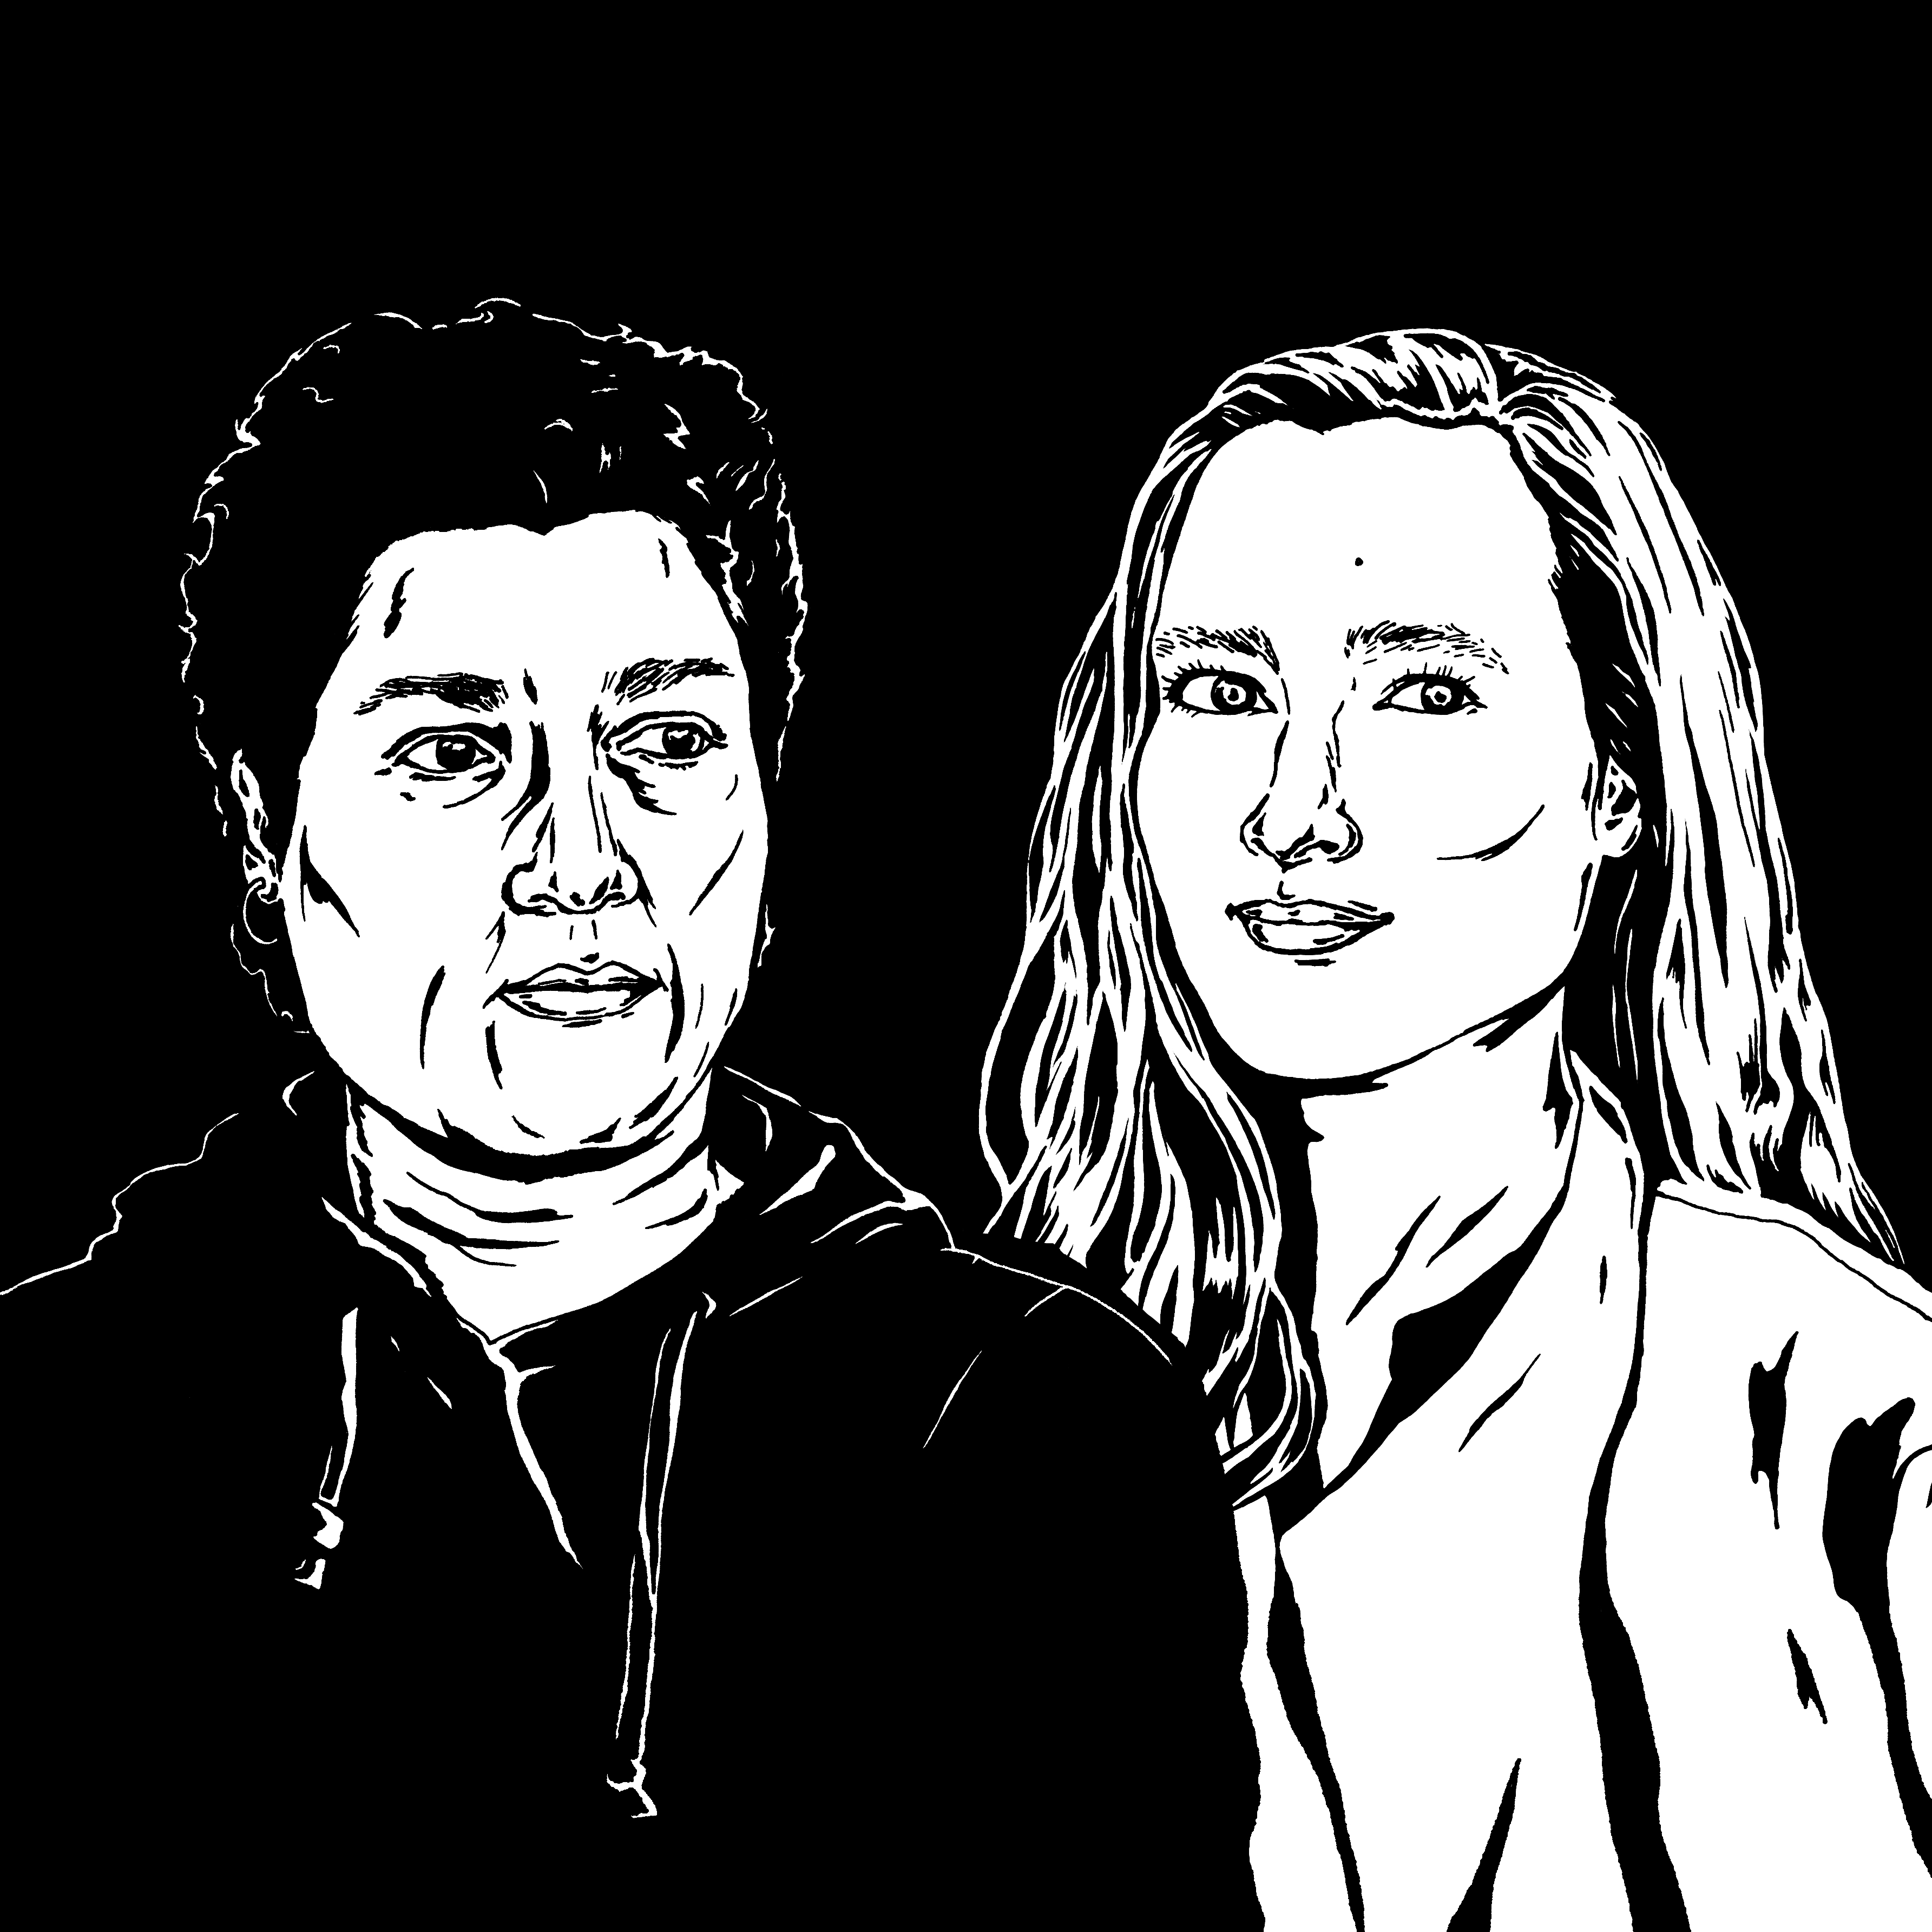 Huma Bhabha and Shahzia Sikander black and white portrait illustration